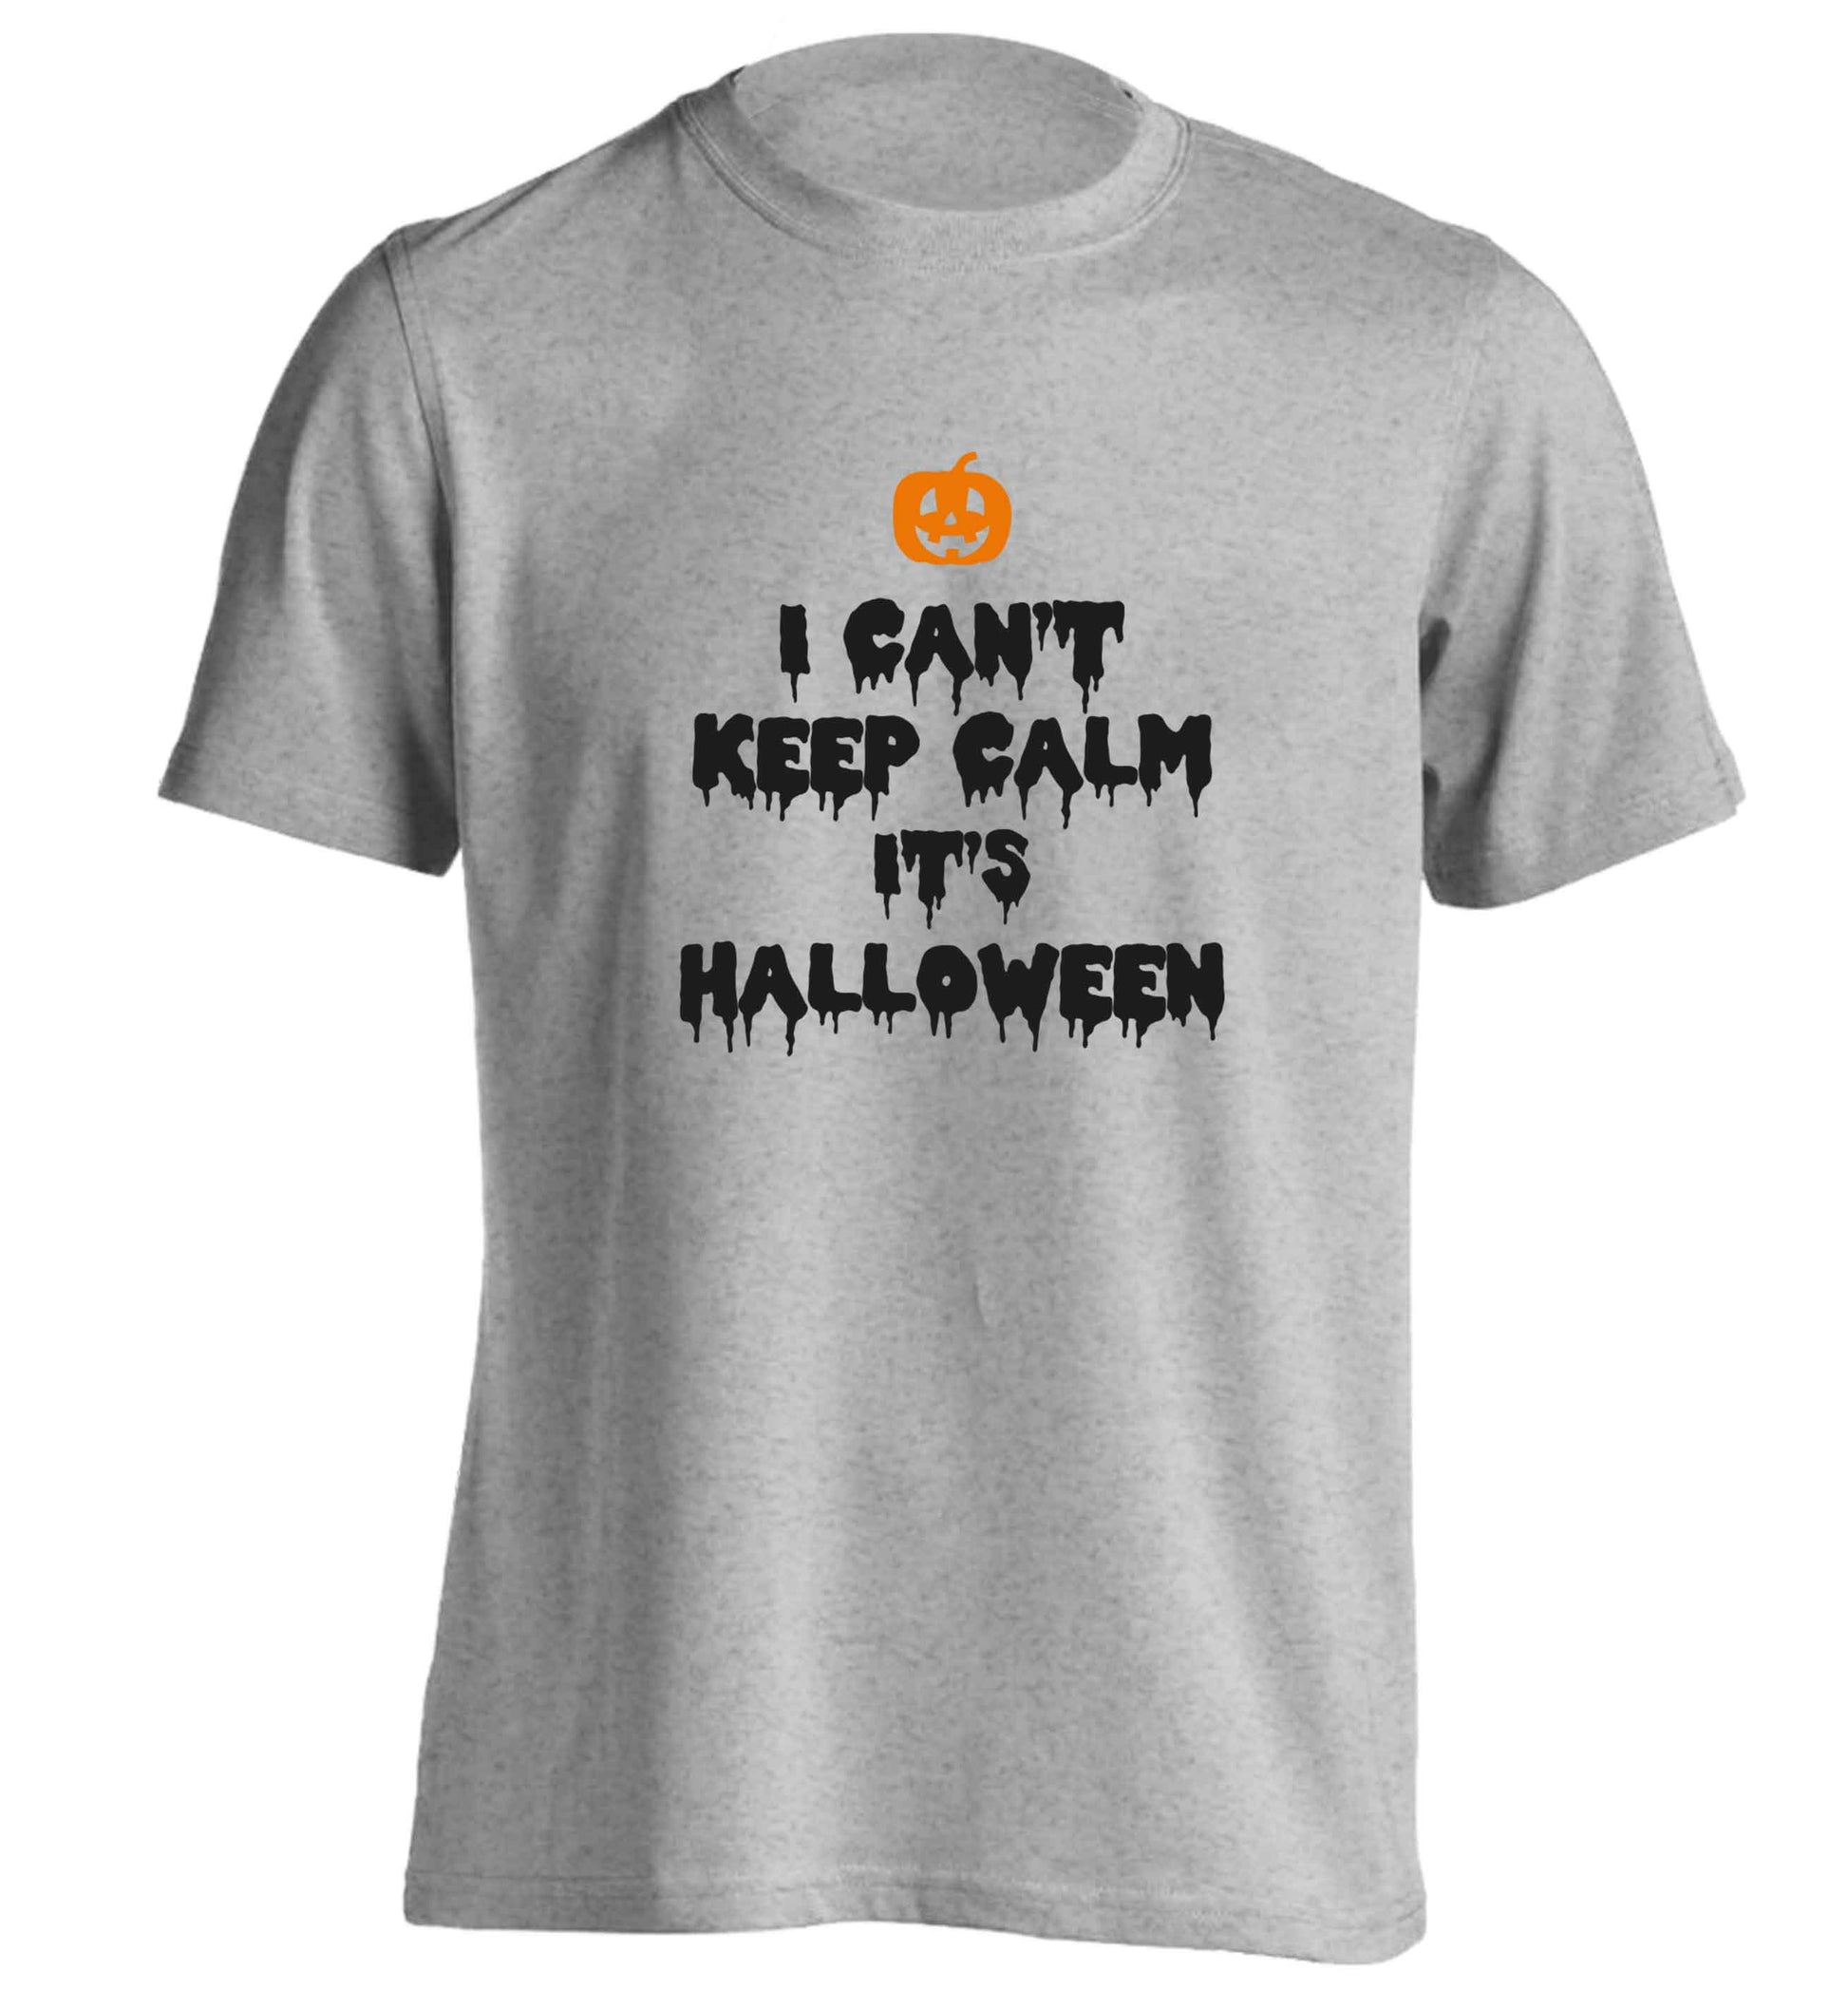 I can't keep calm it's halloween adults unisex grey Tshirt 2XL